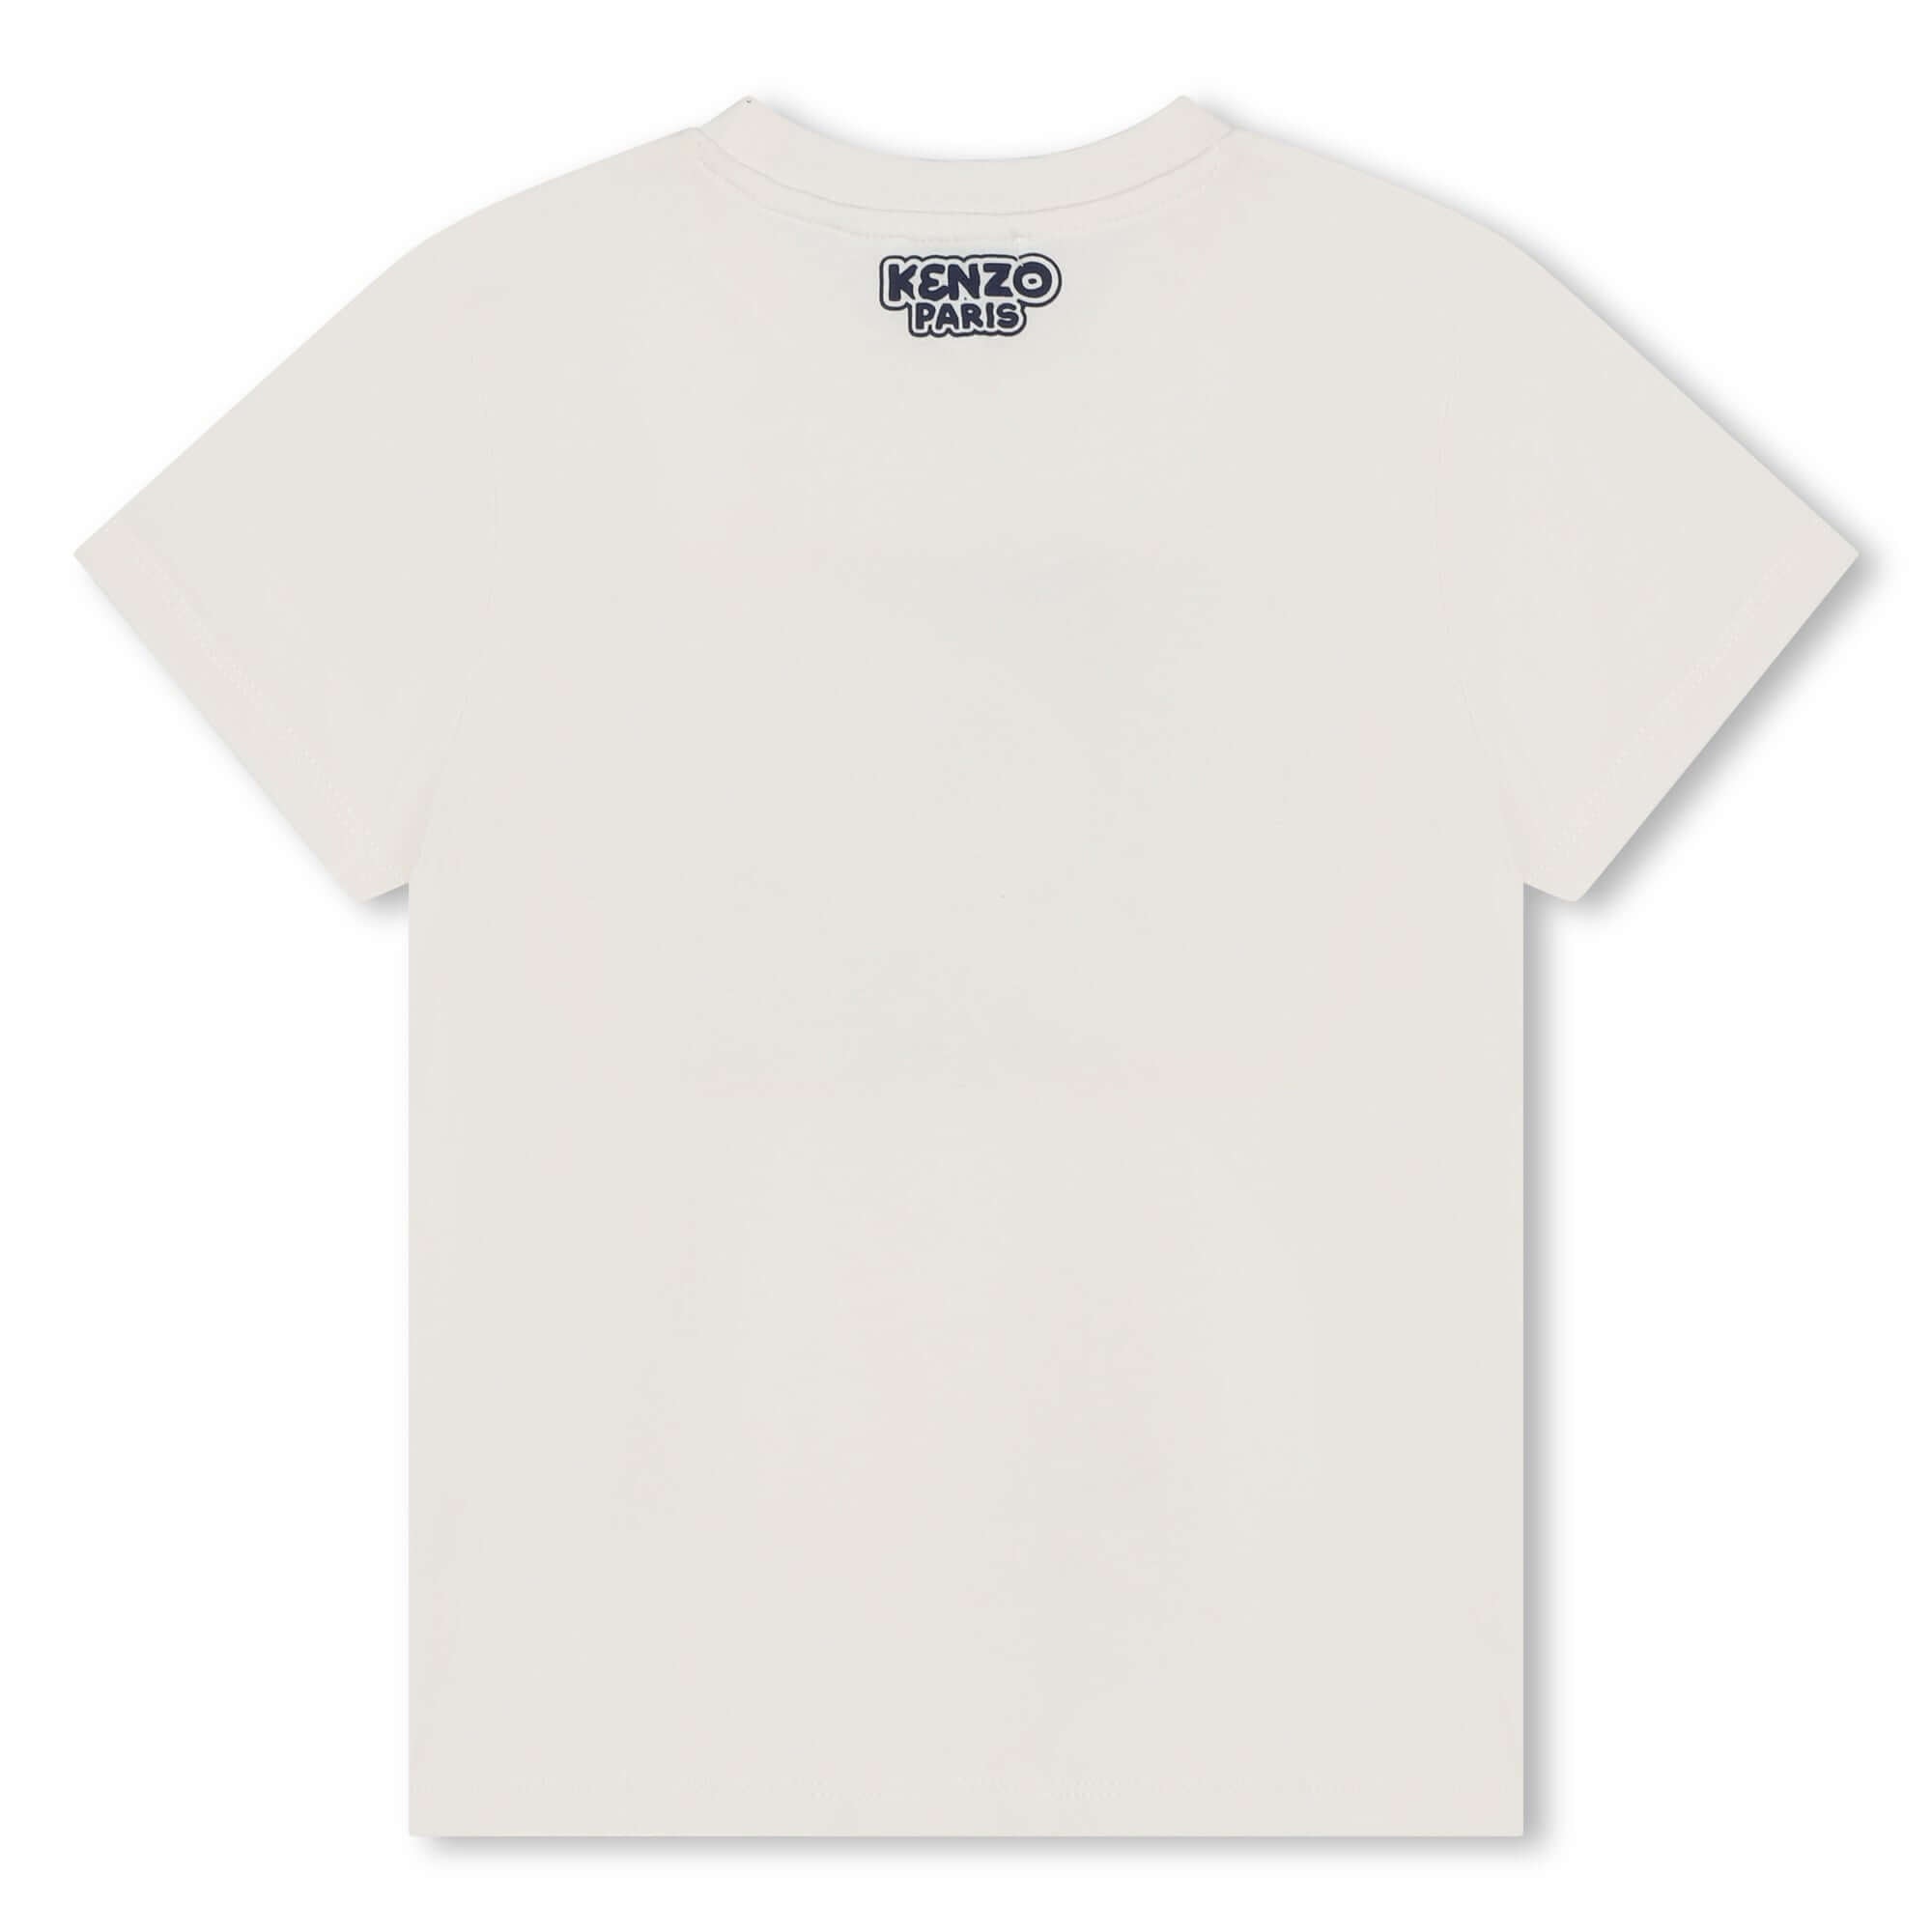 Kenzo Kids Boys White Kenzo Paris Star T-Shirt